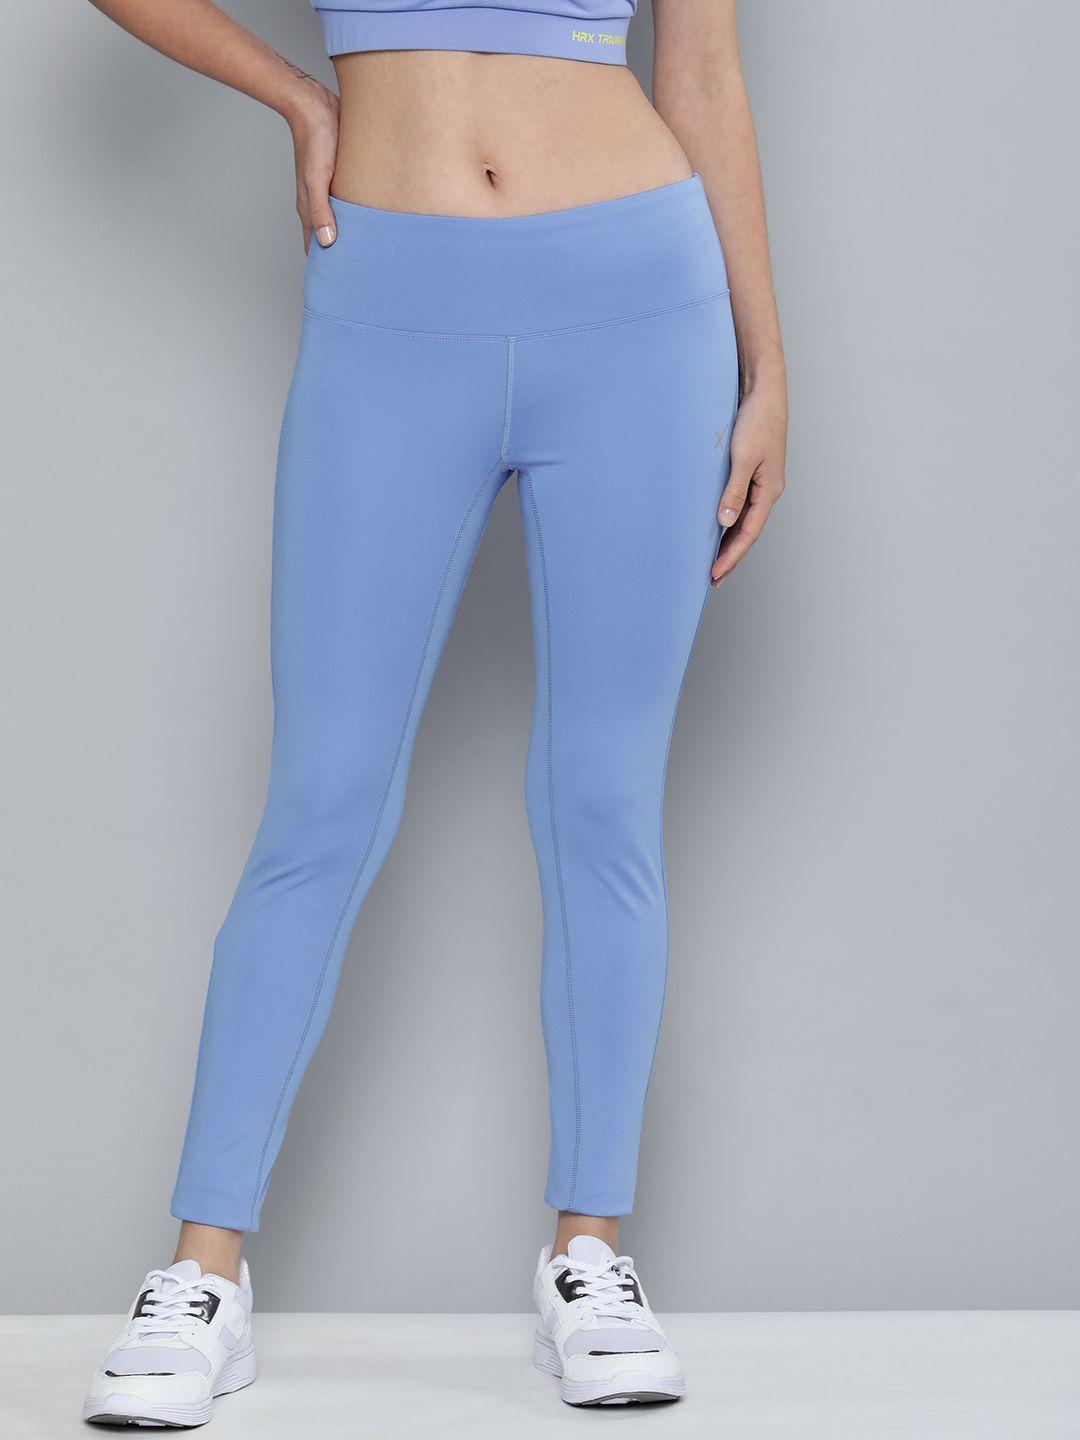 hrx-by-hrithik-roshan-women-light-blue-rapid-dry-training-tights